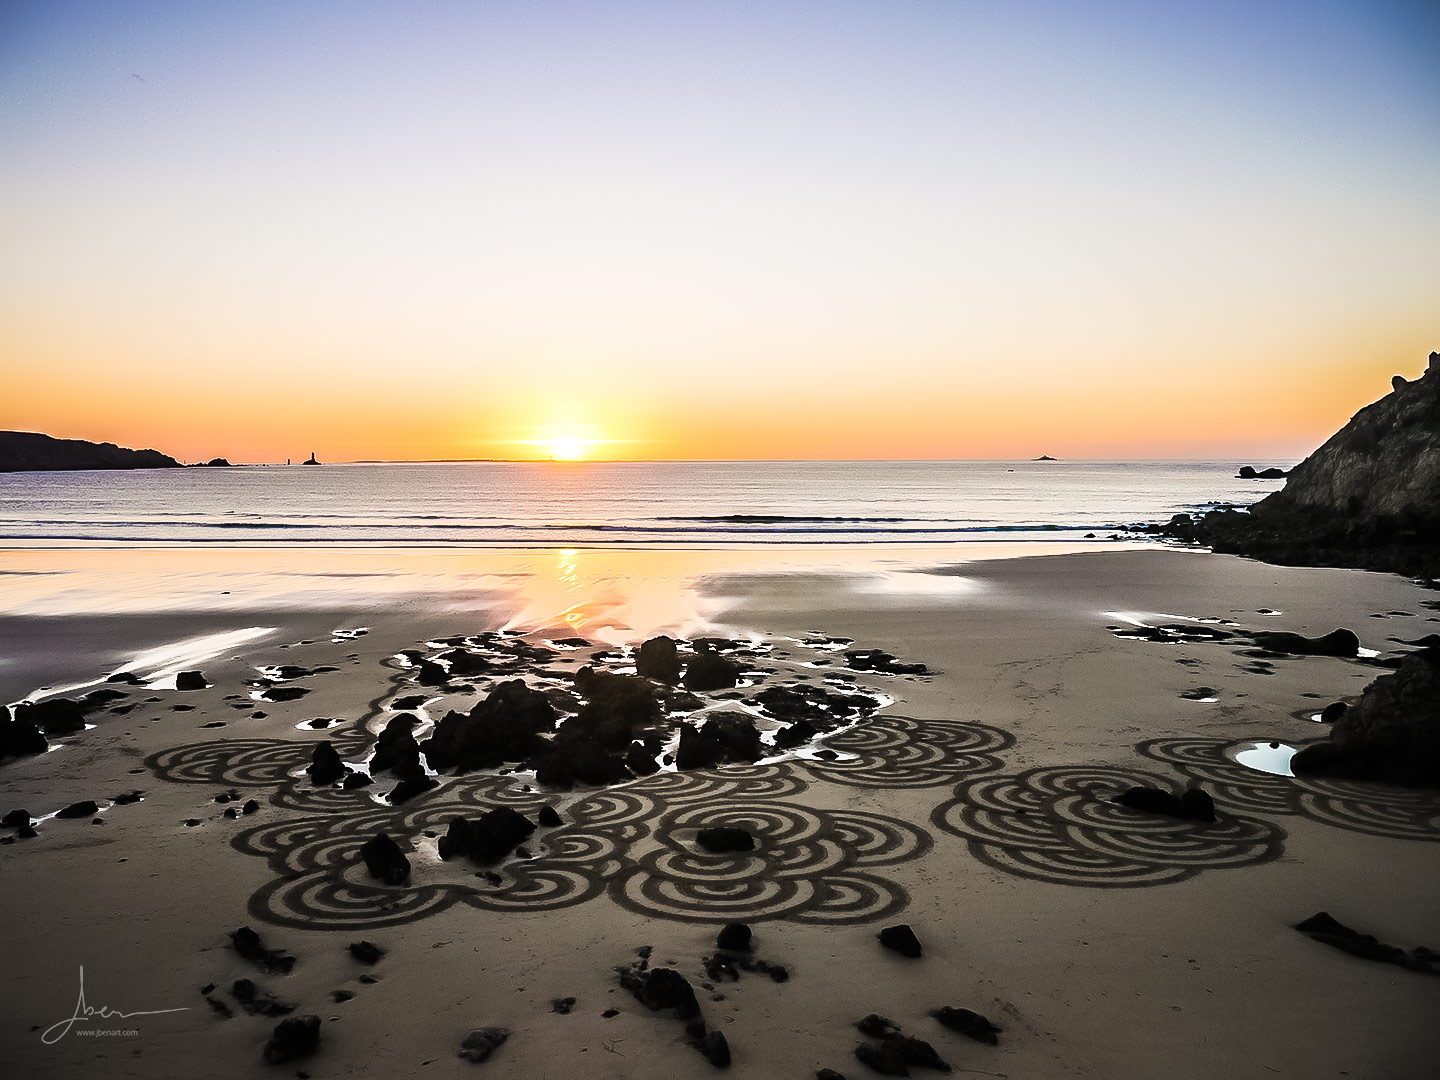 Beach art patterns on the rocks